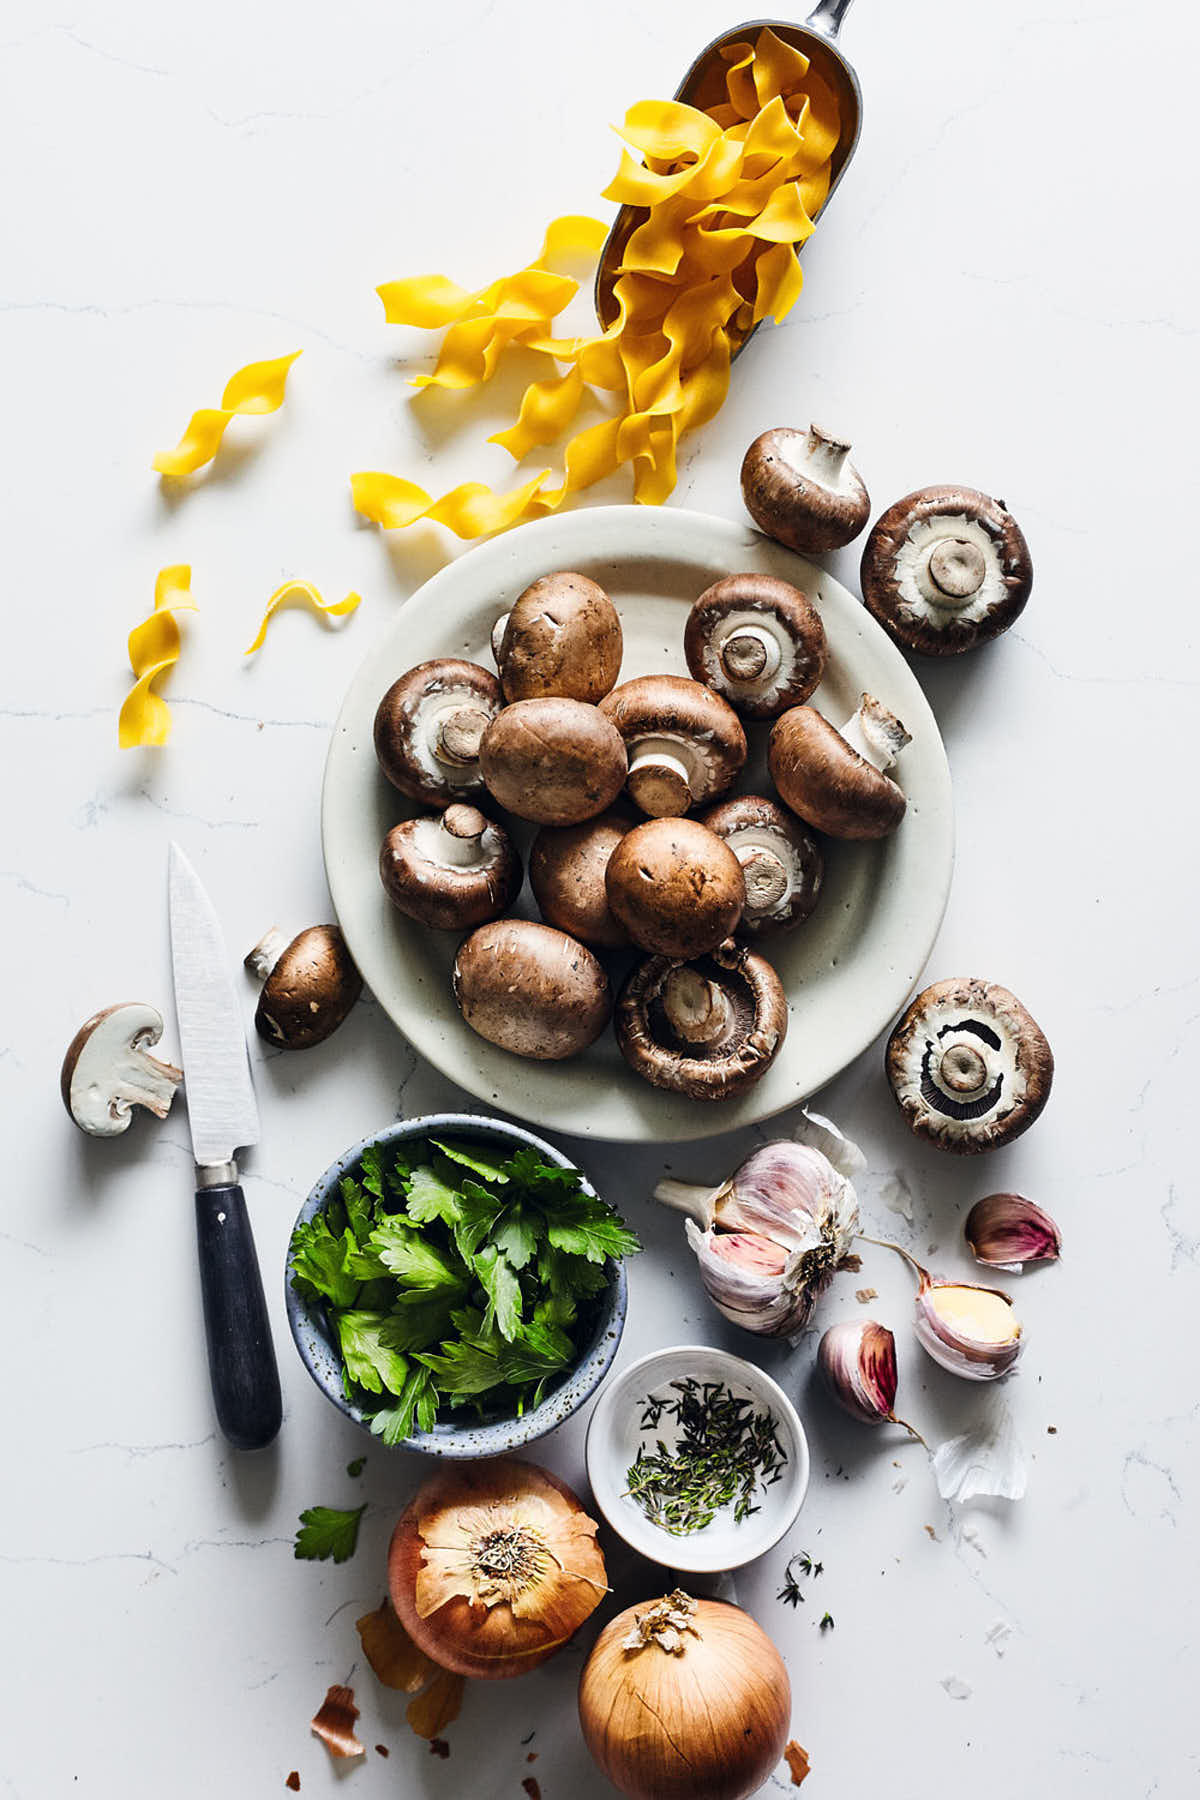 Mushroom stroganoff ingredients like pasta, mushrooms, parsley and onions on a countertop